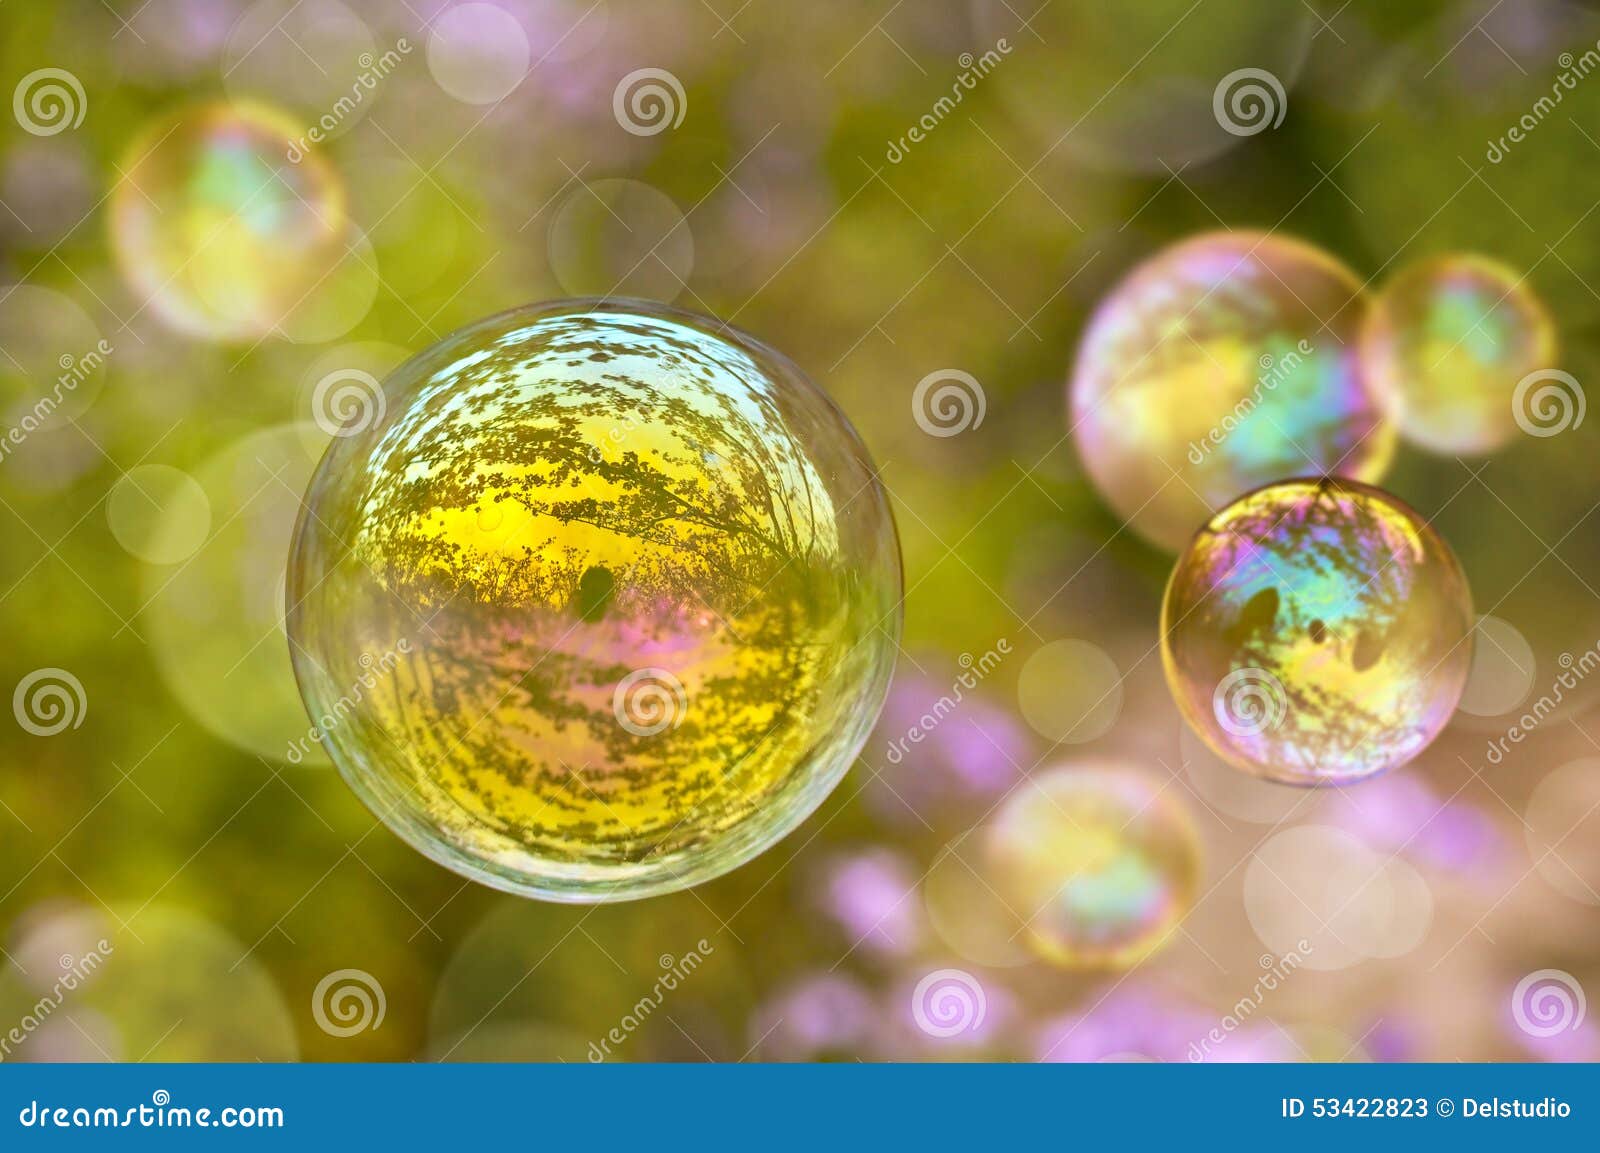 soap bubble, green vegetal background